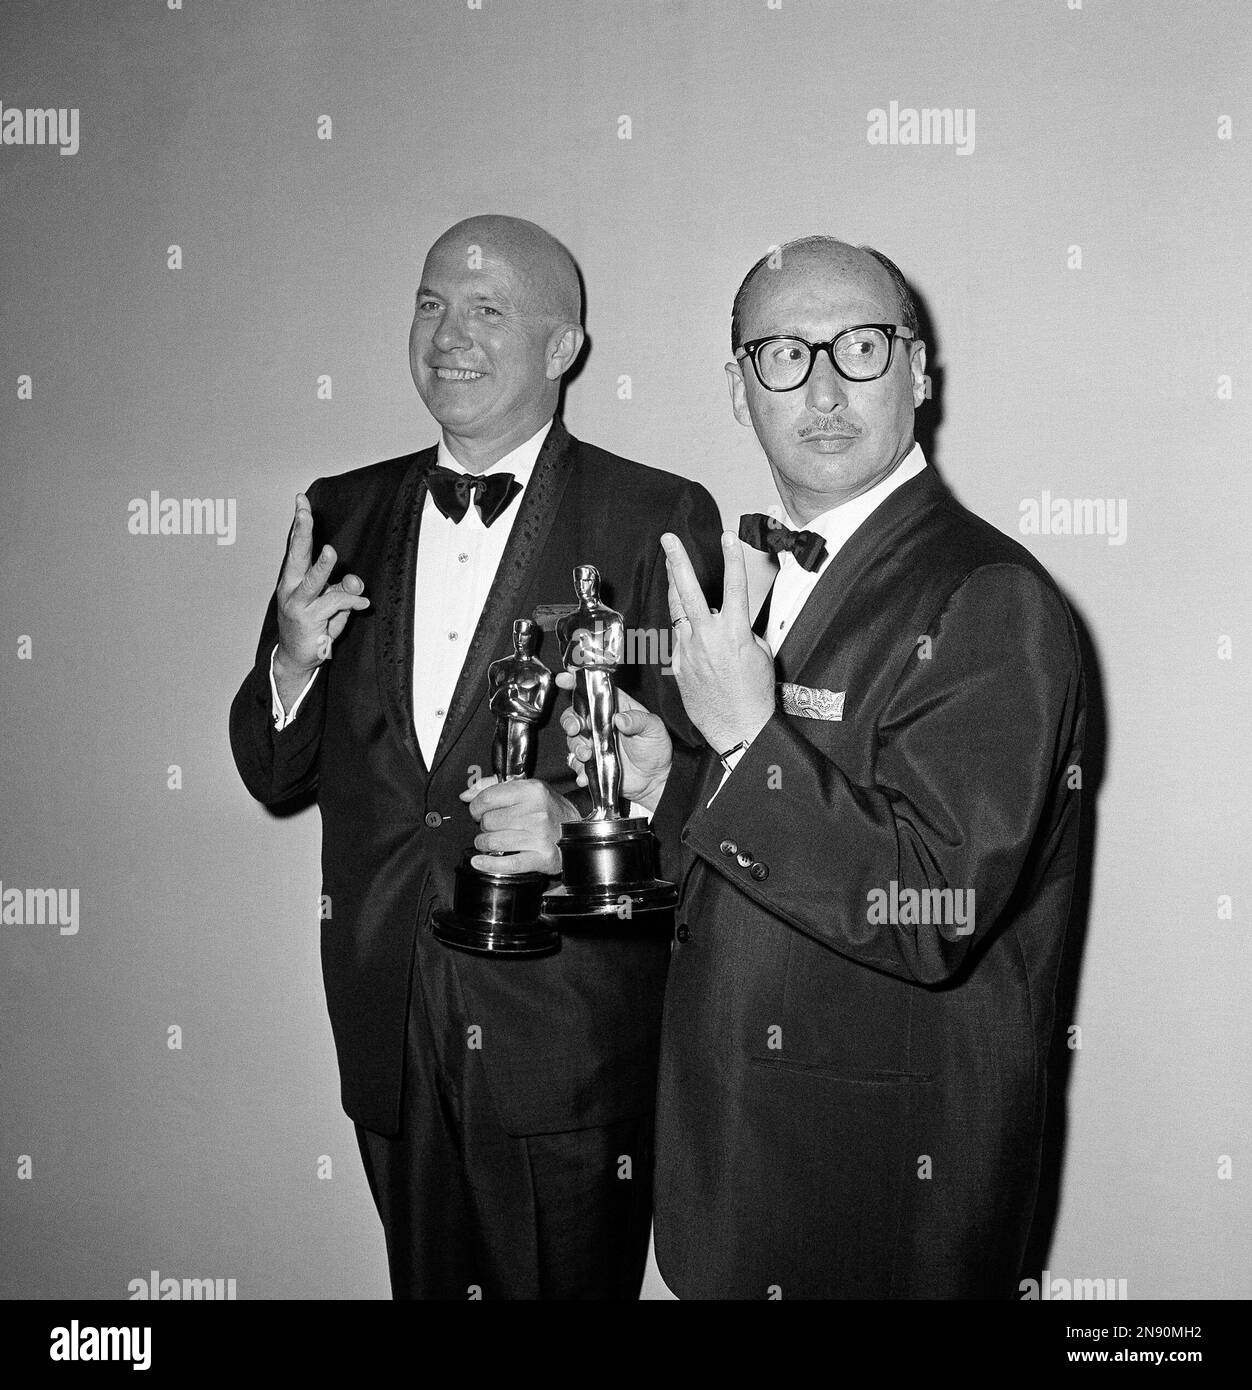 Jimmy Van Heusen, left, and Sammy Cahn hold Oscars won for the